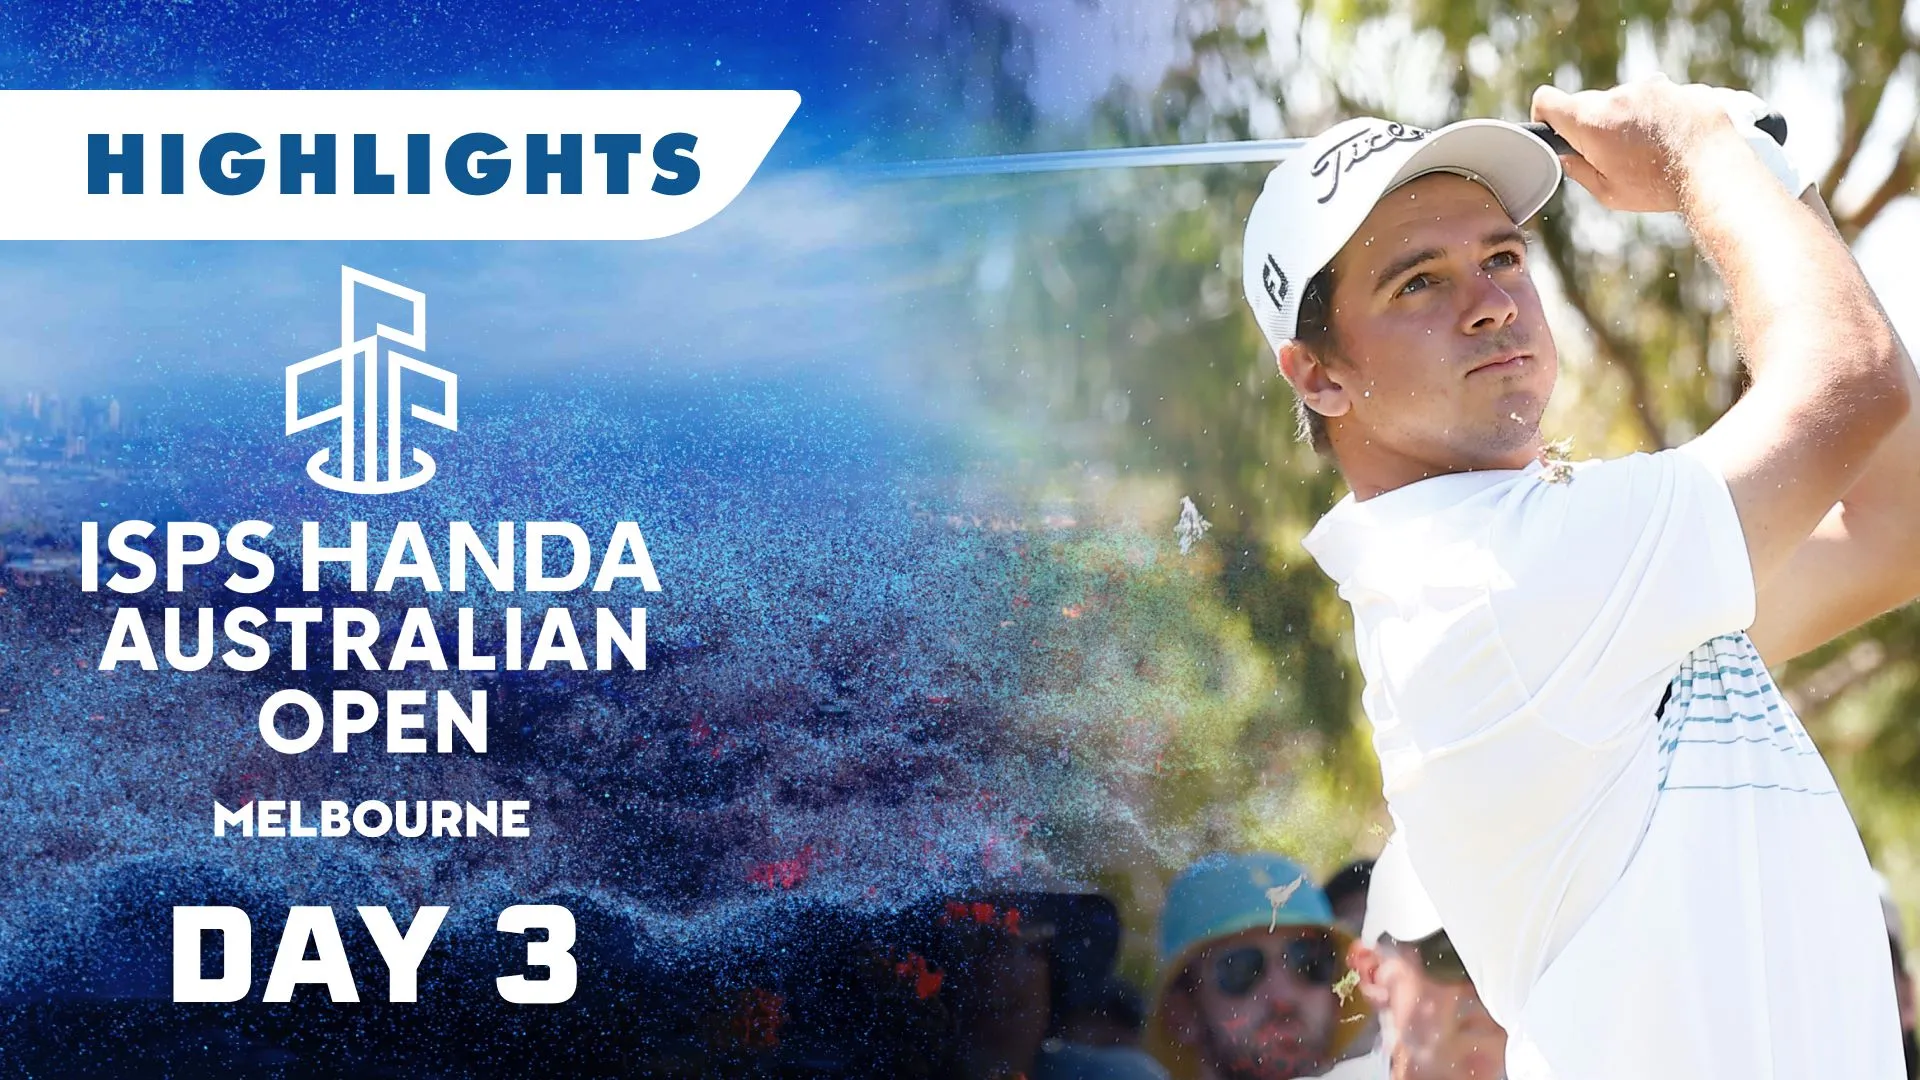 Round 3 Highlights  2019 ISPS Handa World Super 6 Perth 